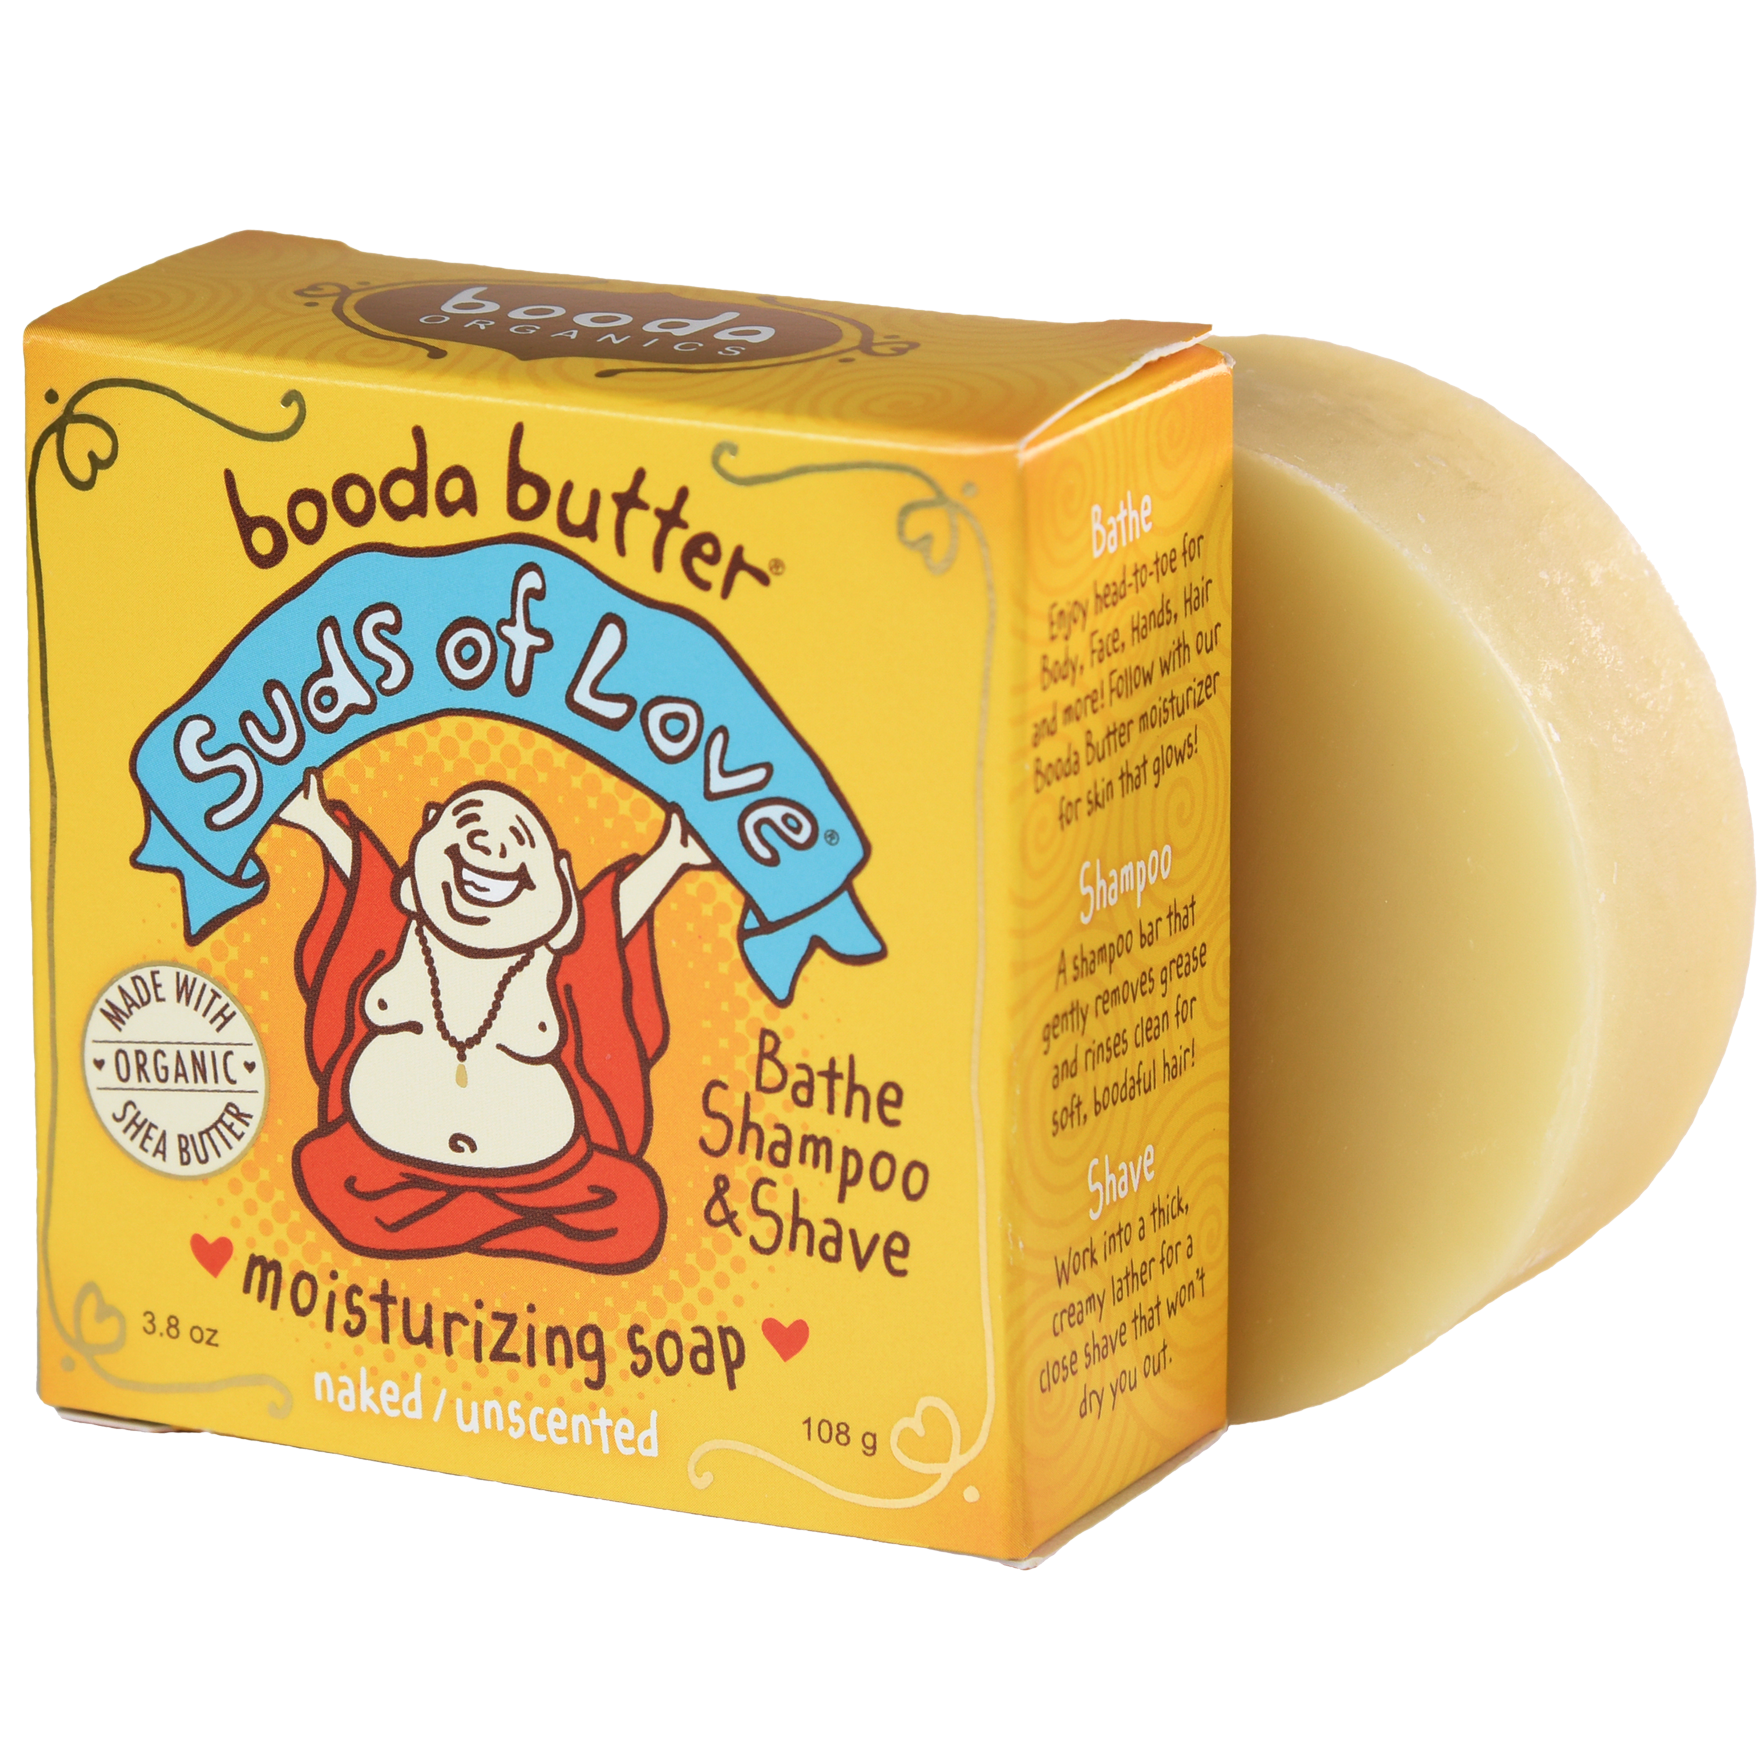 African Shea Butter Soap for Sensitive Skin - Unscented Mild Soap